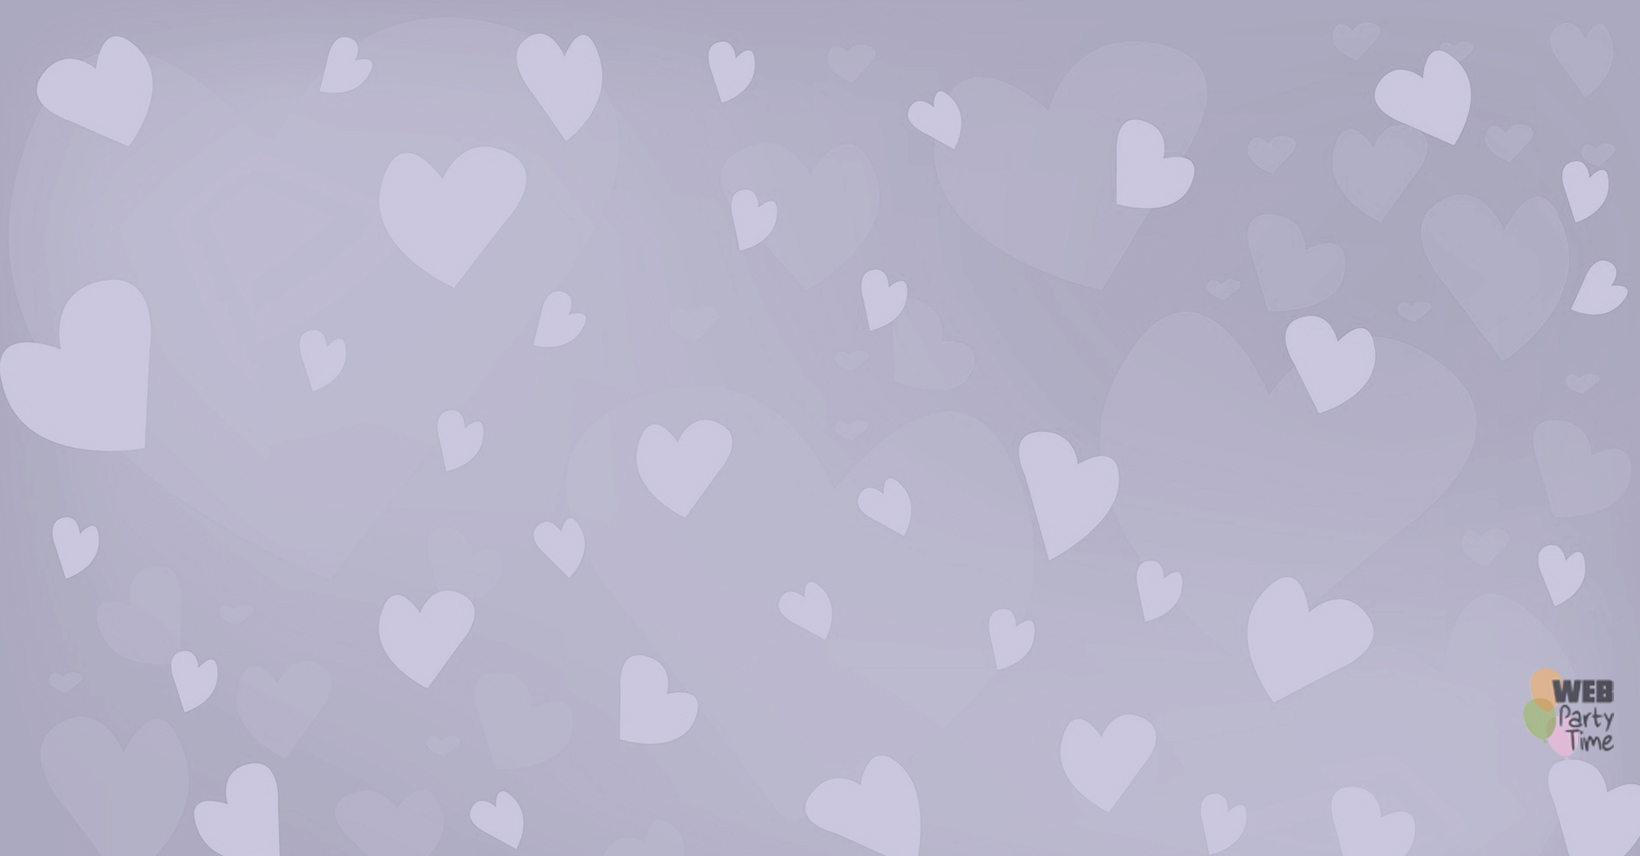 the purple hearts theme